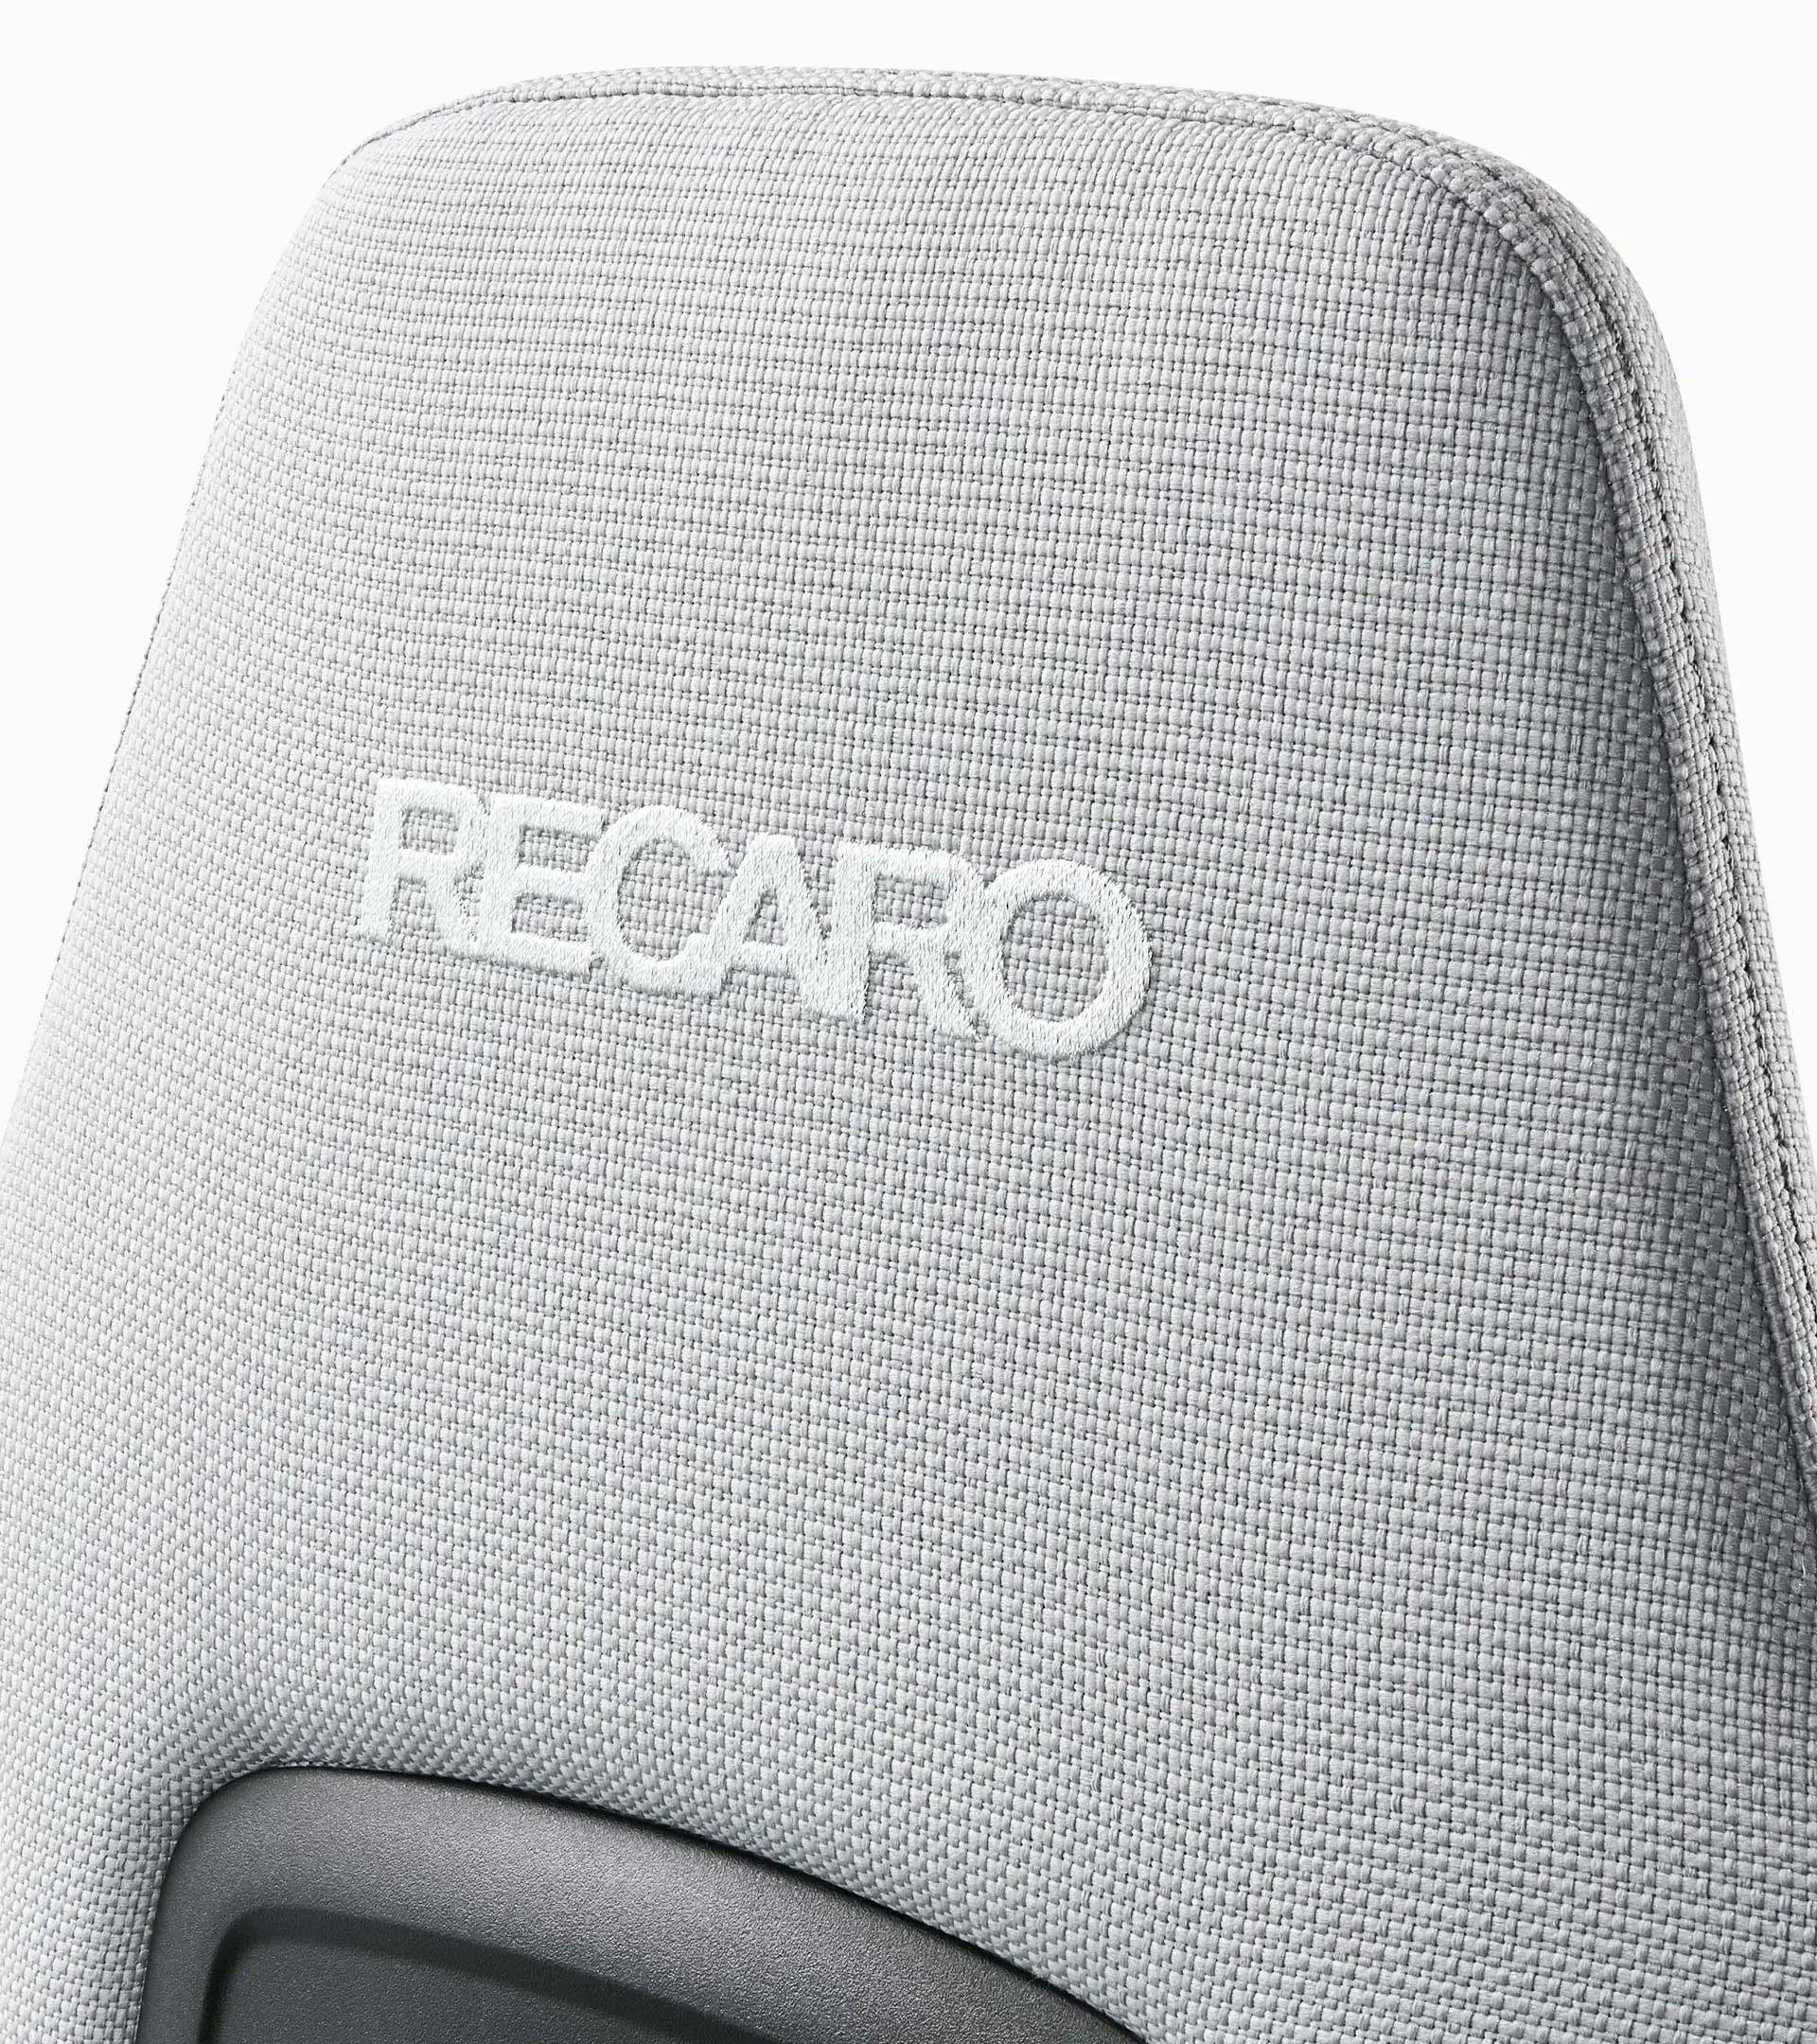 RECARO x Porsche Gaming Stuhl Limited Edition 7